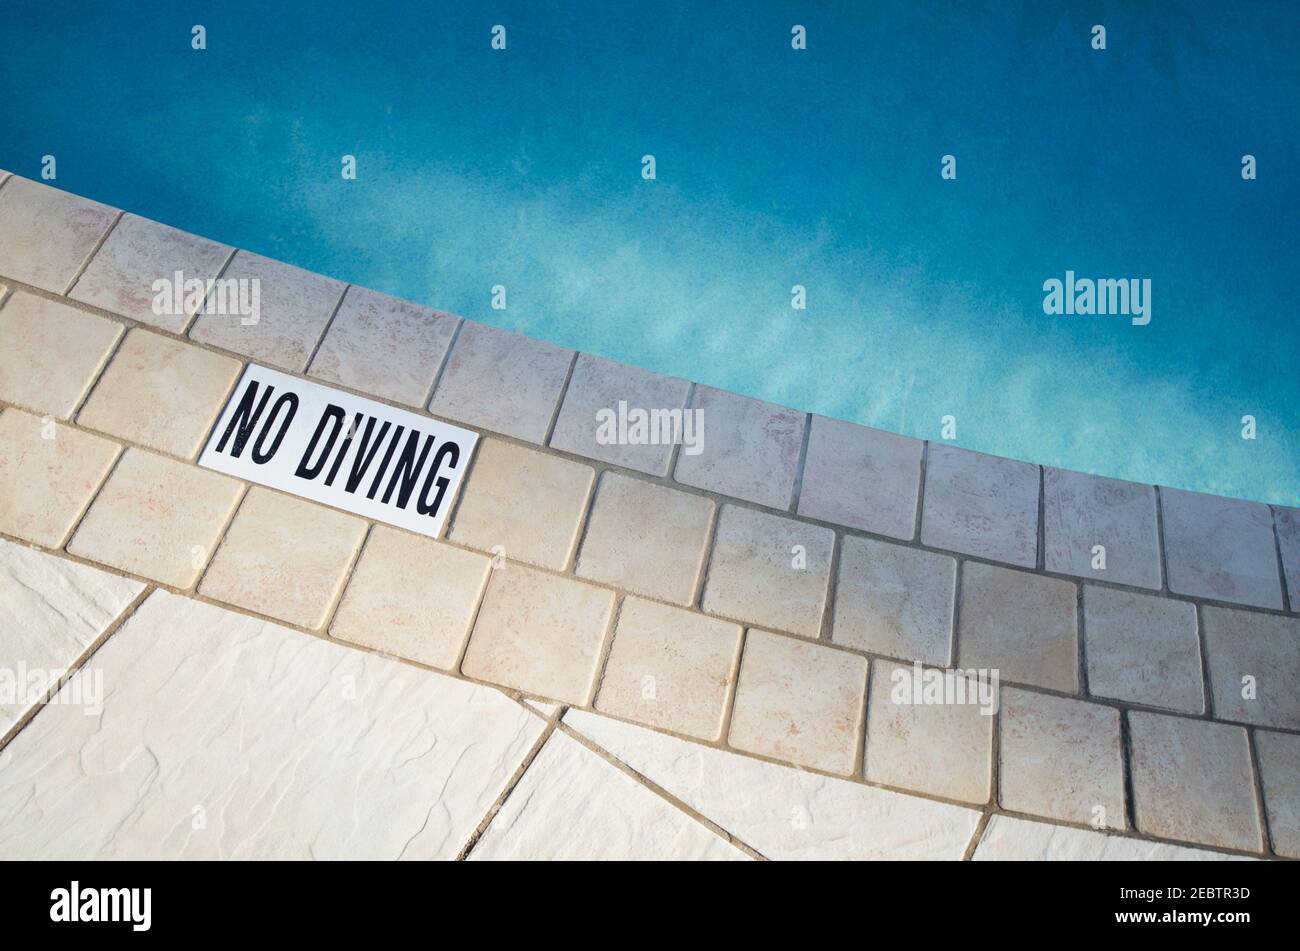 Warning sign at edge of swimming pool Stock Photo